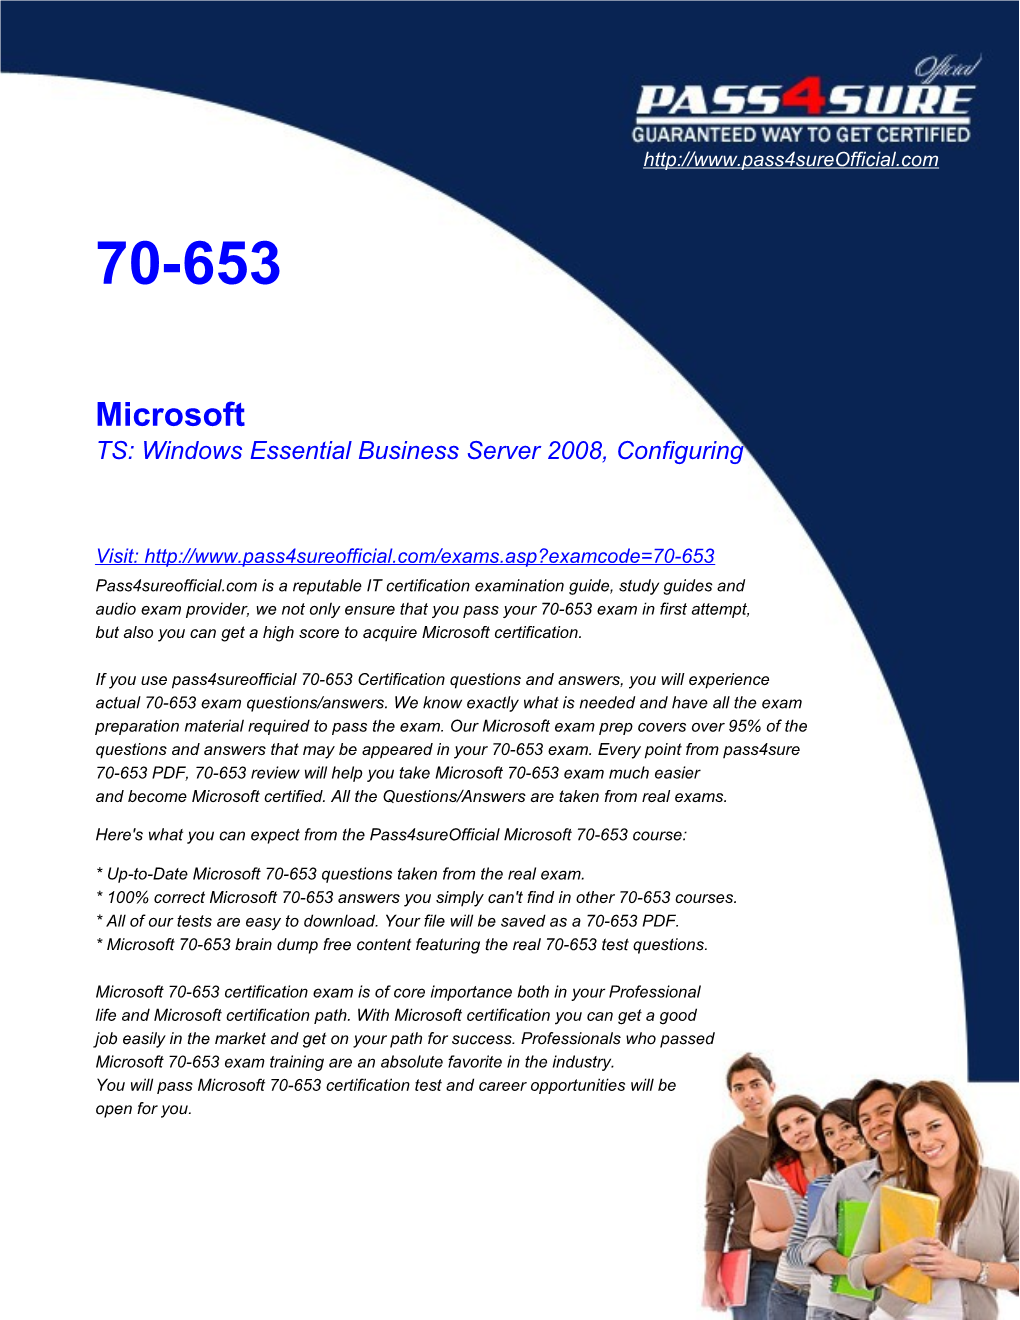 TS: Windows Essential Business Server 2008, Configuring